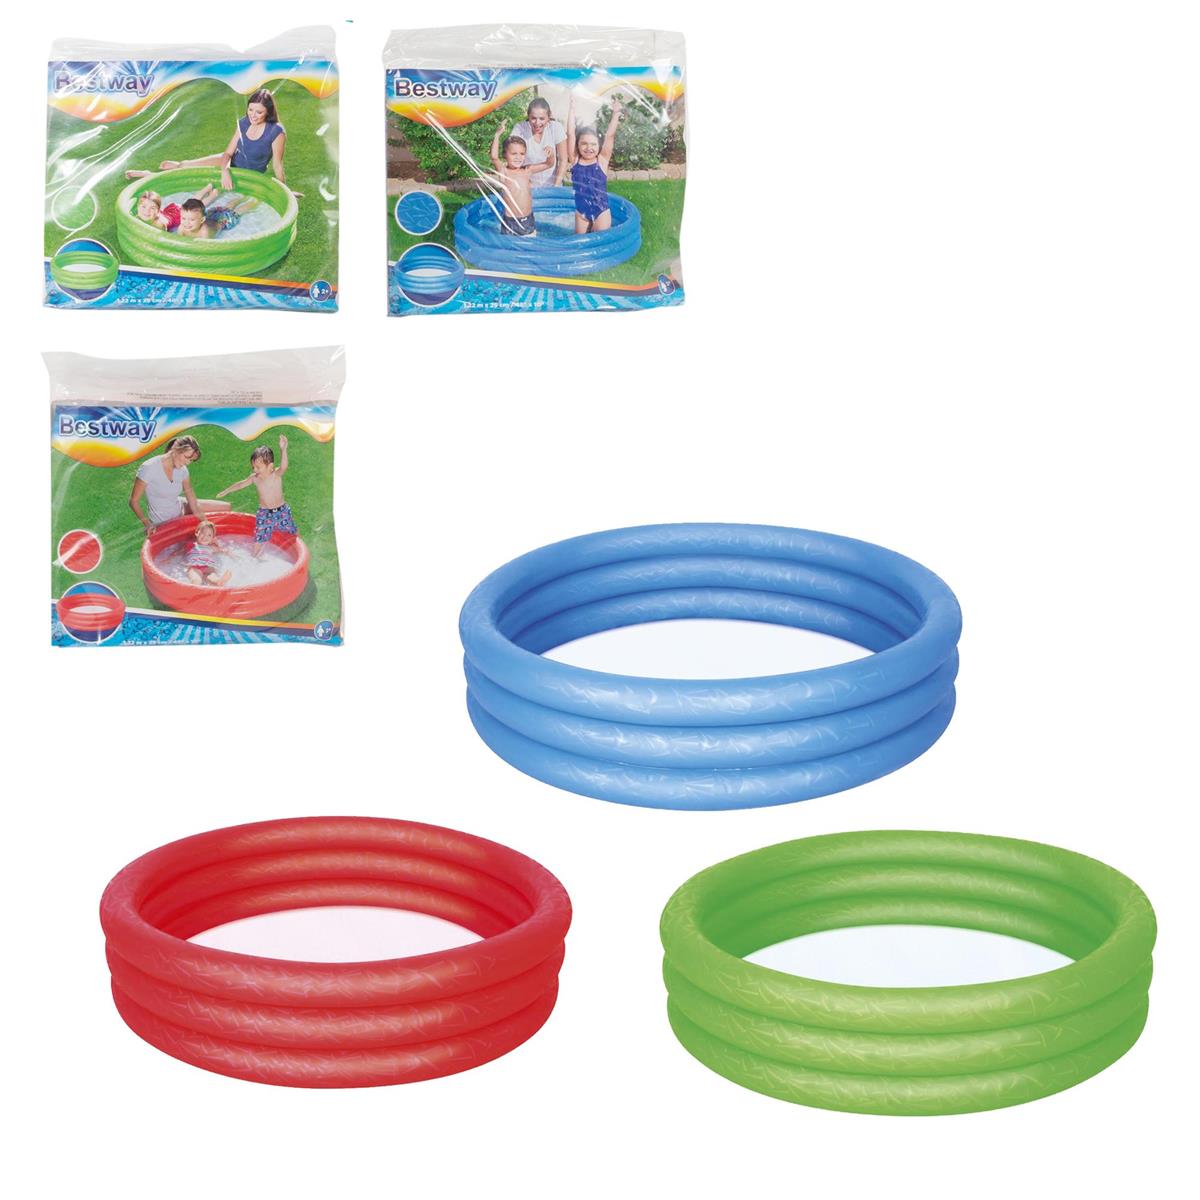 Inflatable 3-Rings Pool 48in dia.